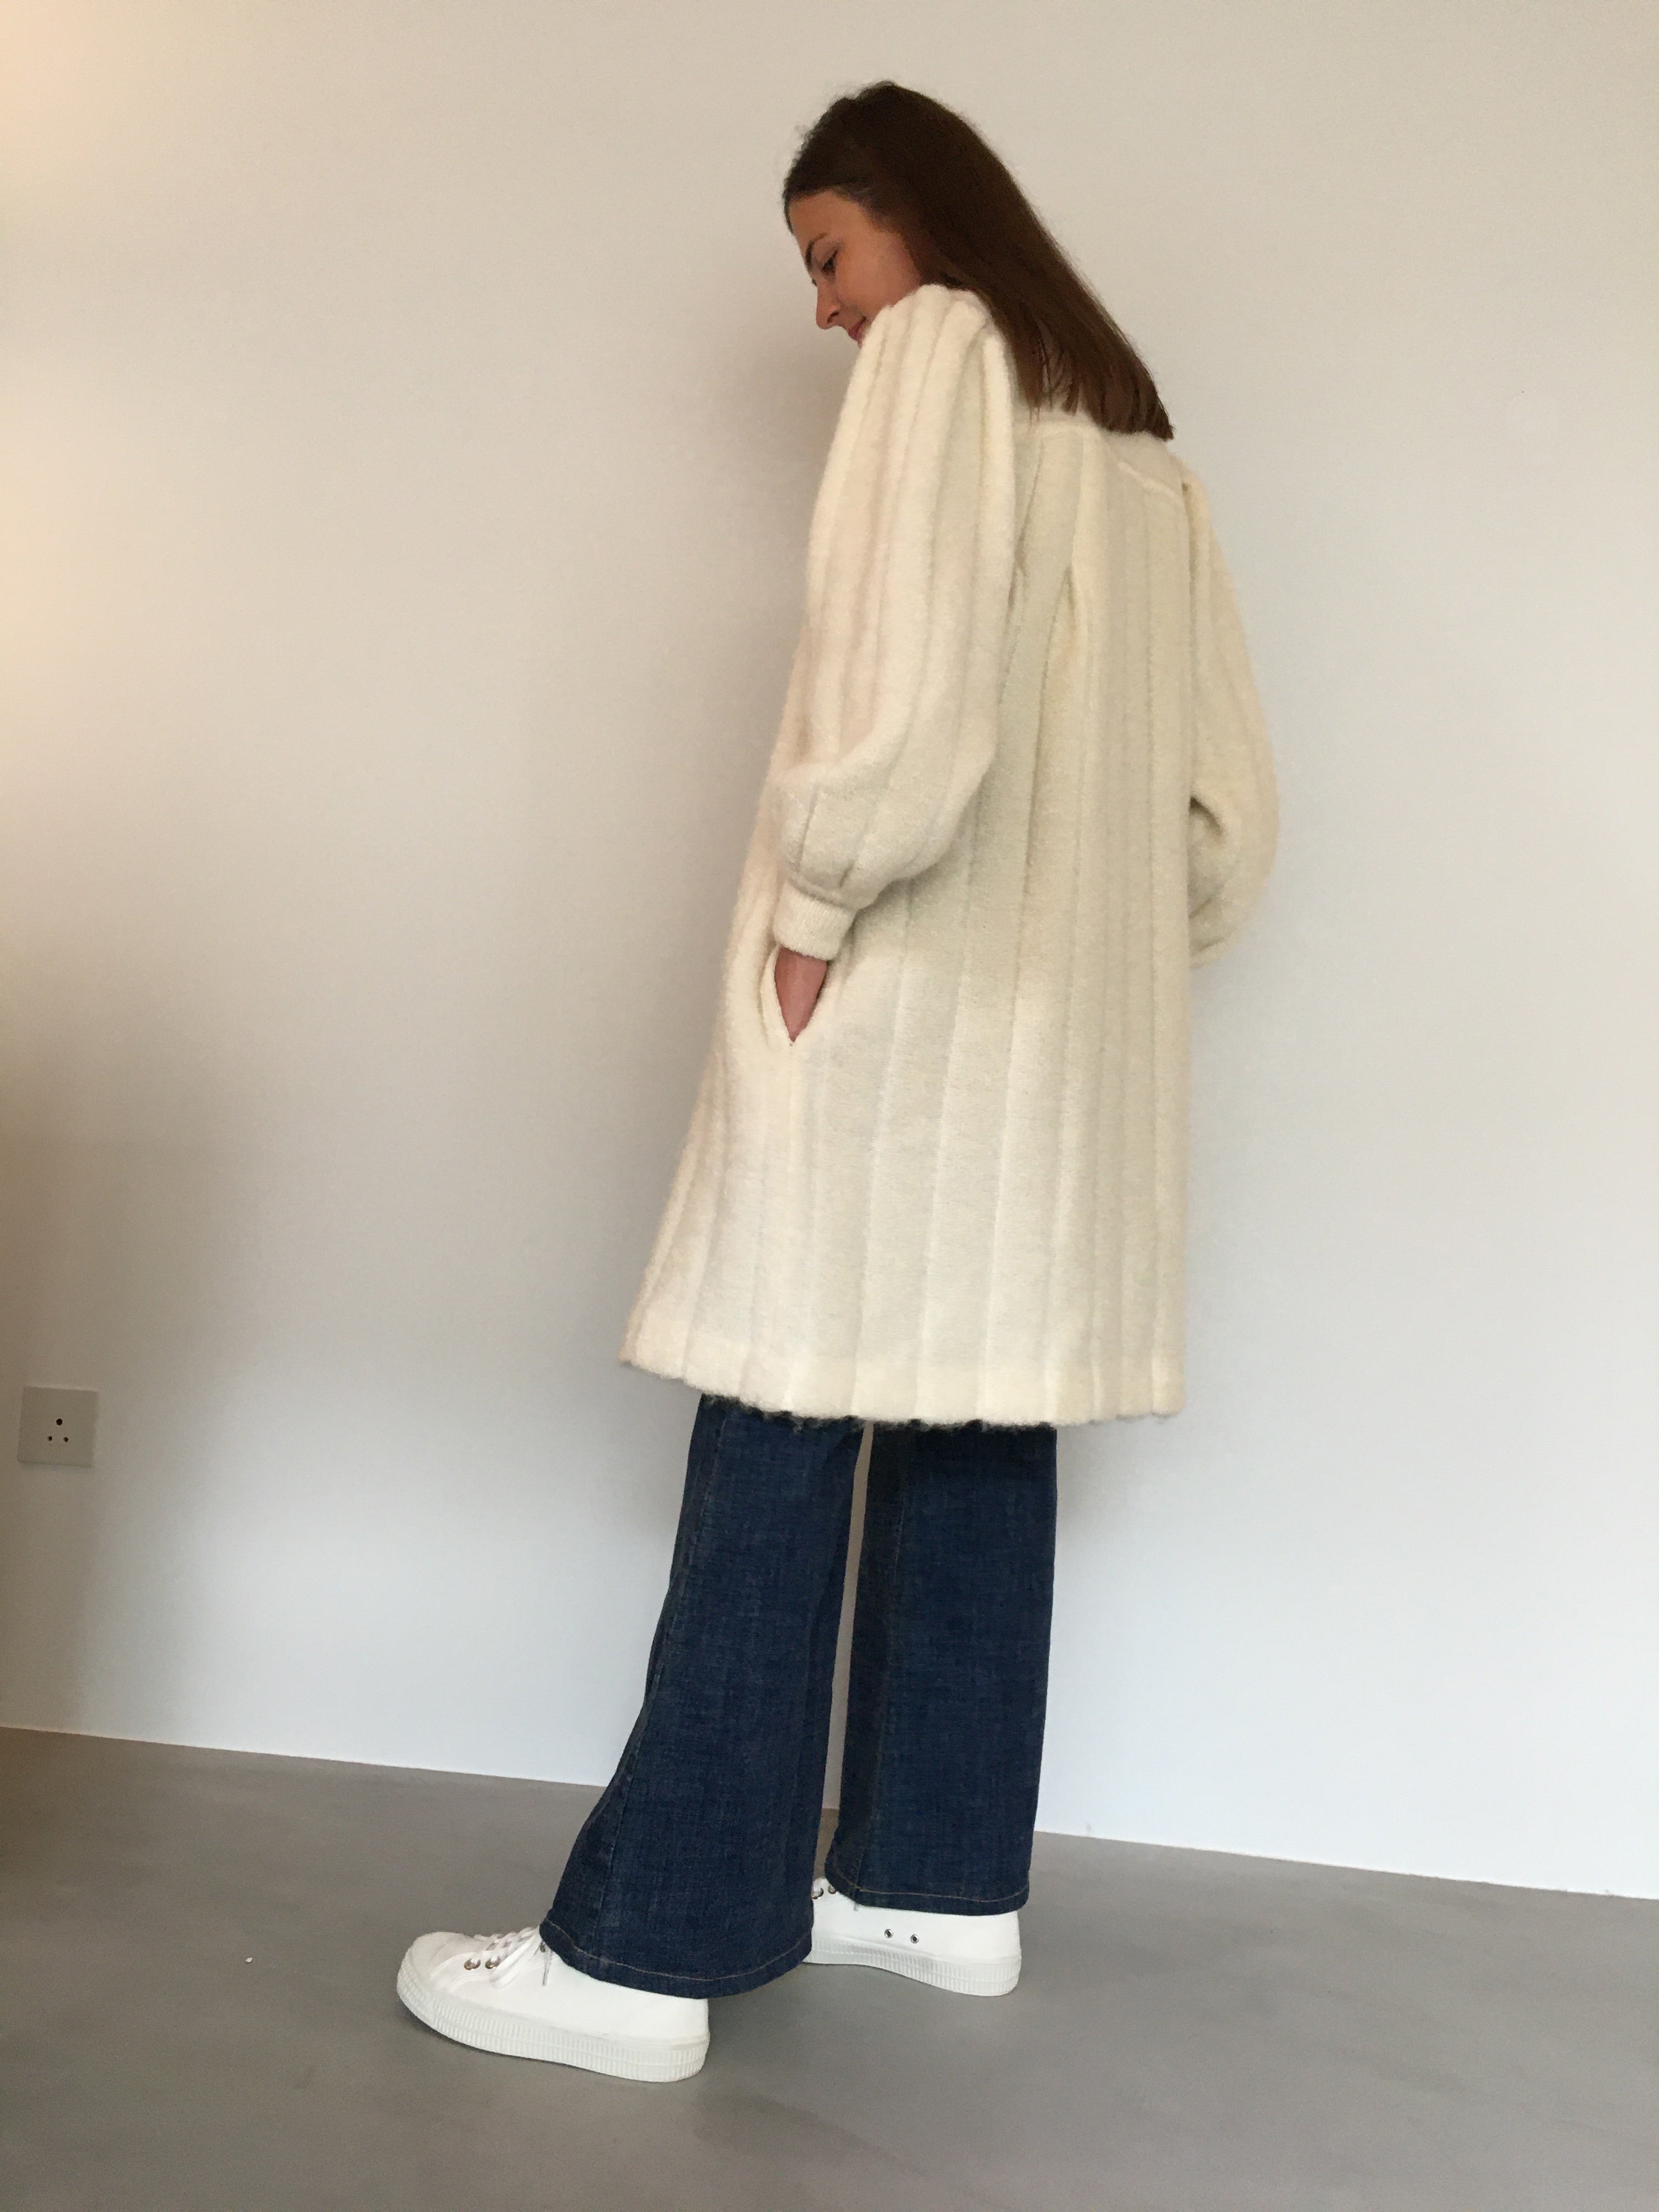 Vintage knitted cardigan / coat